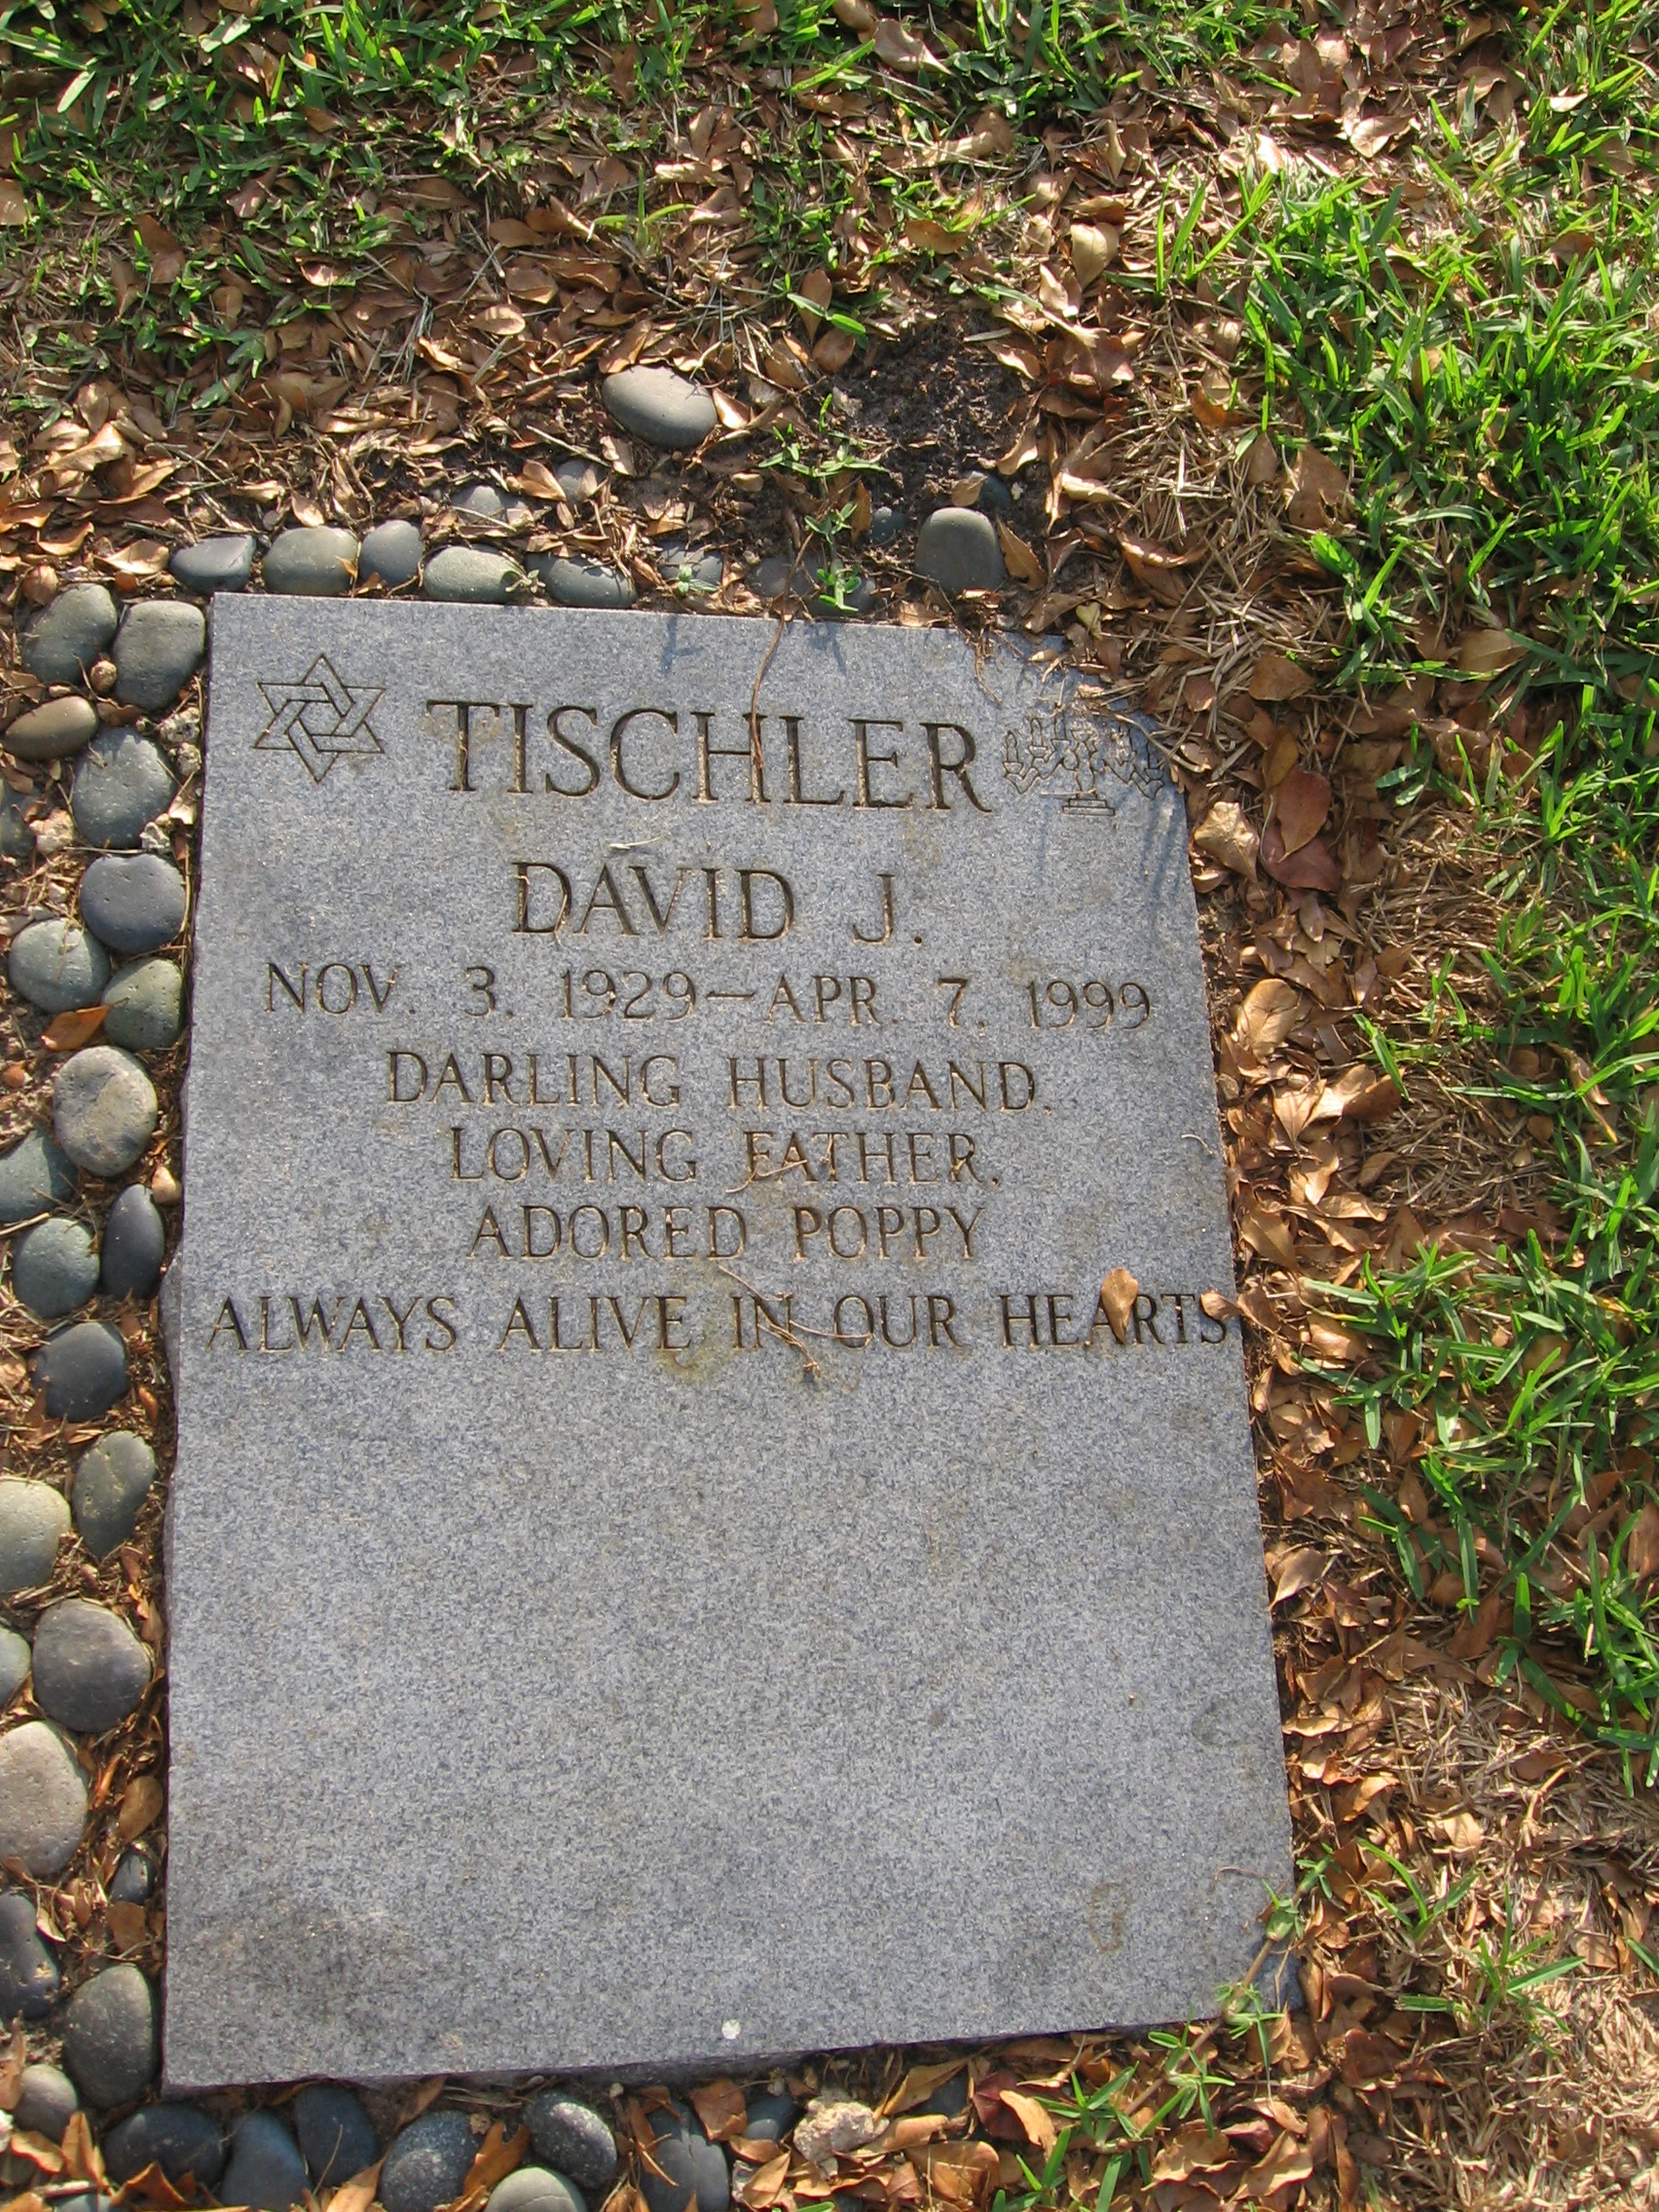 David J Tischler